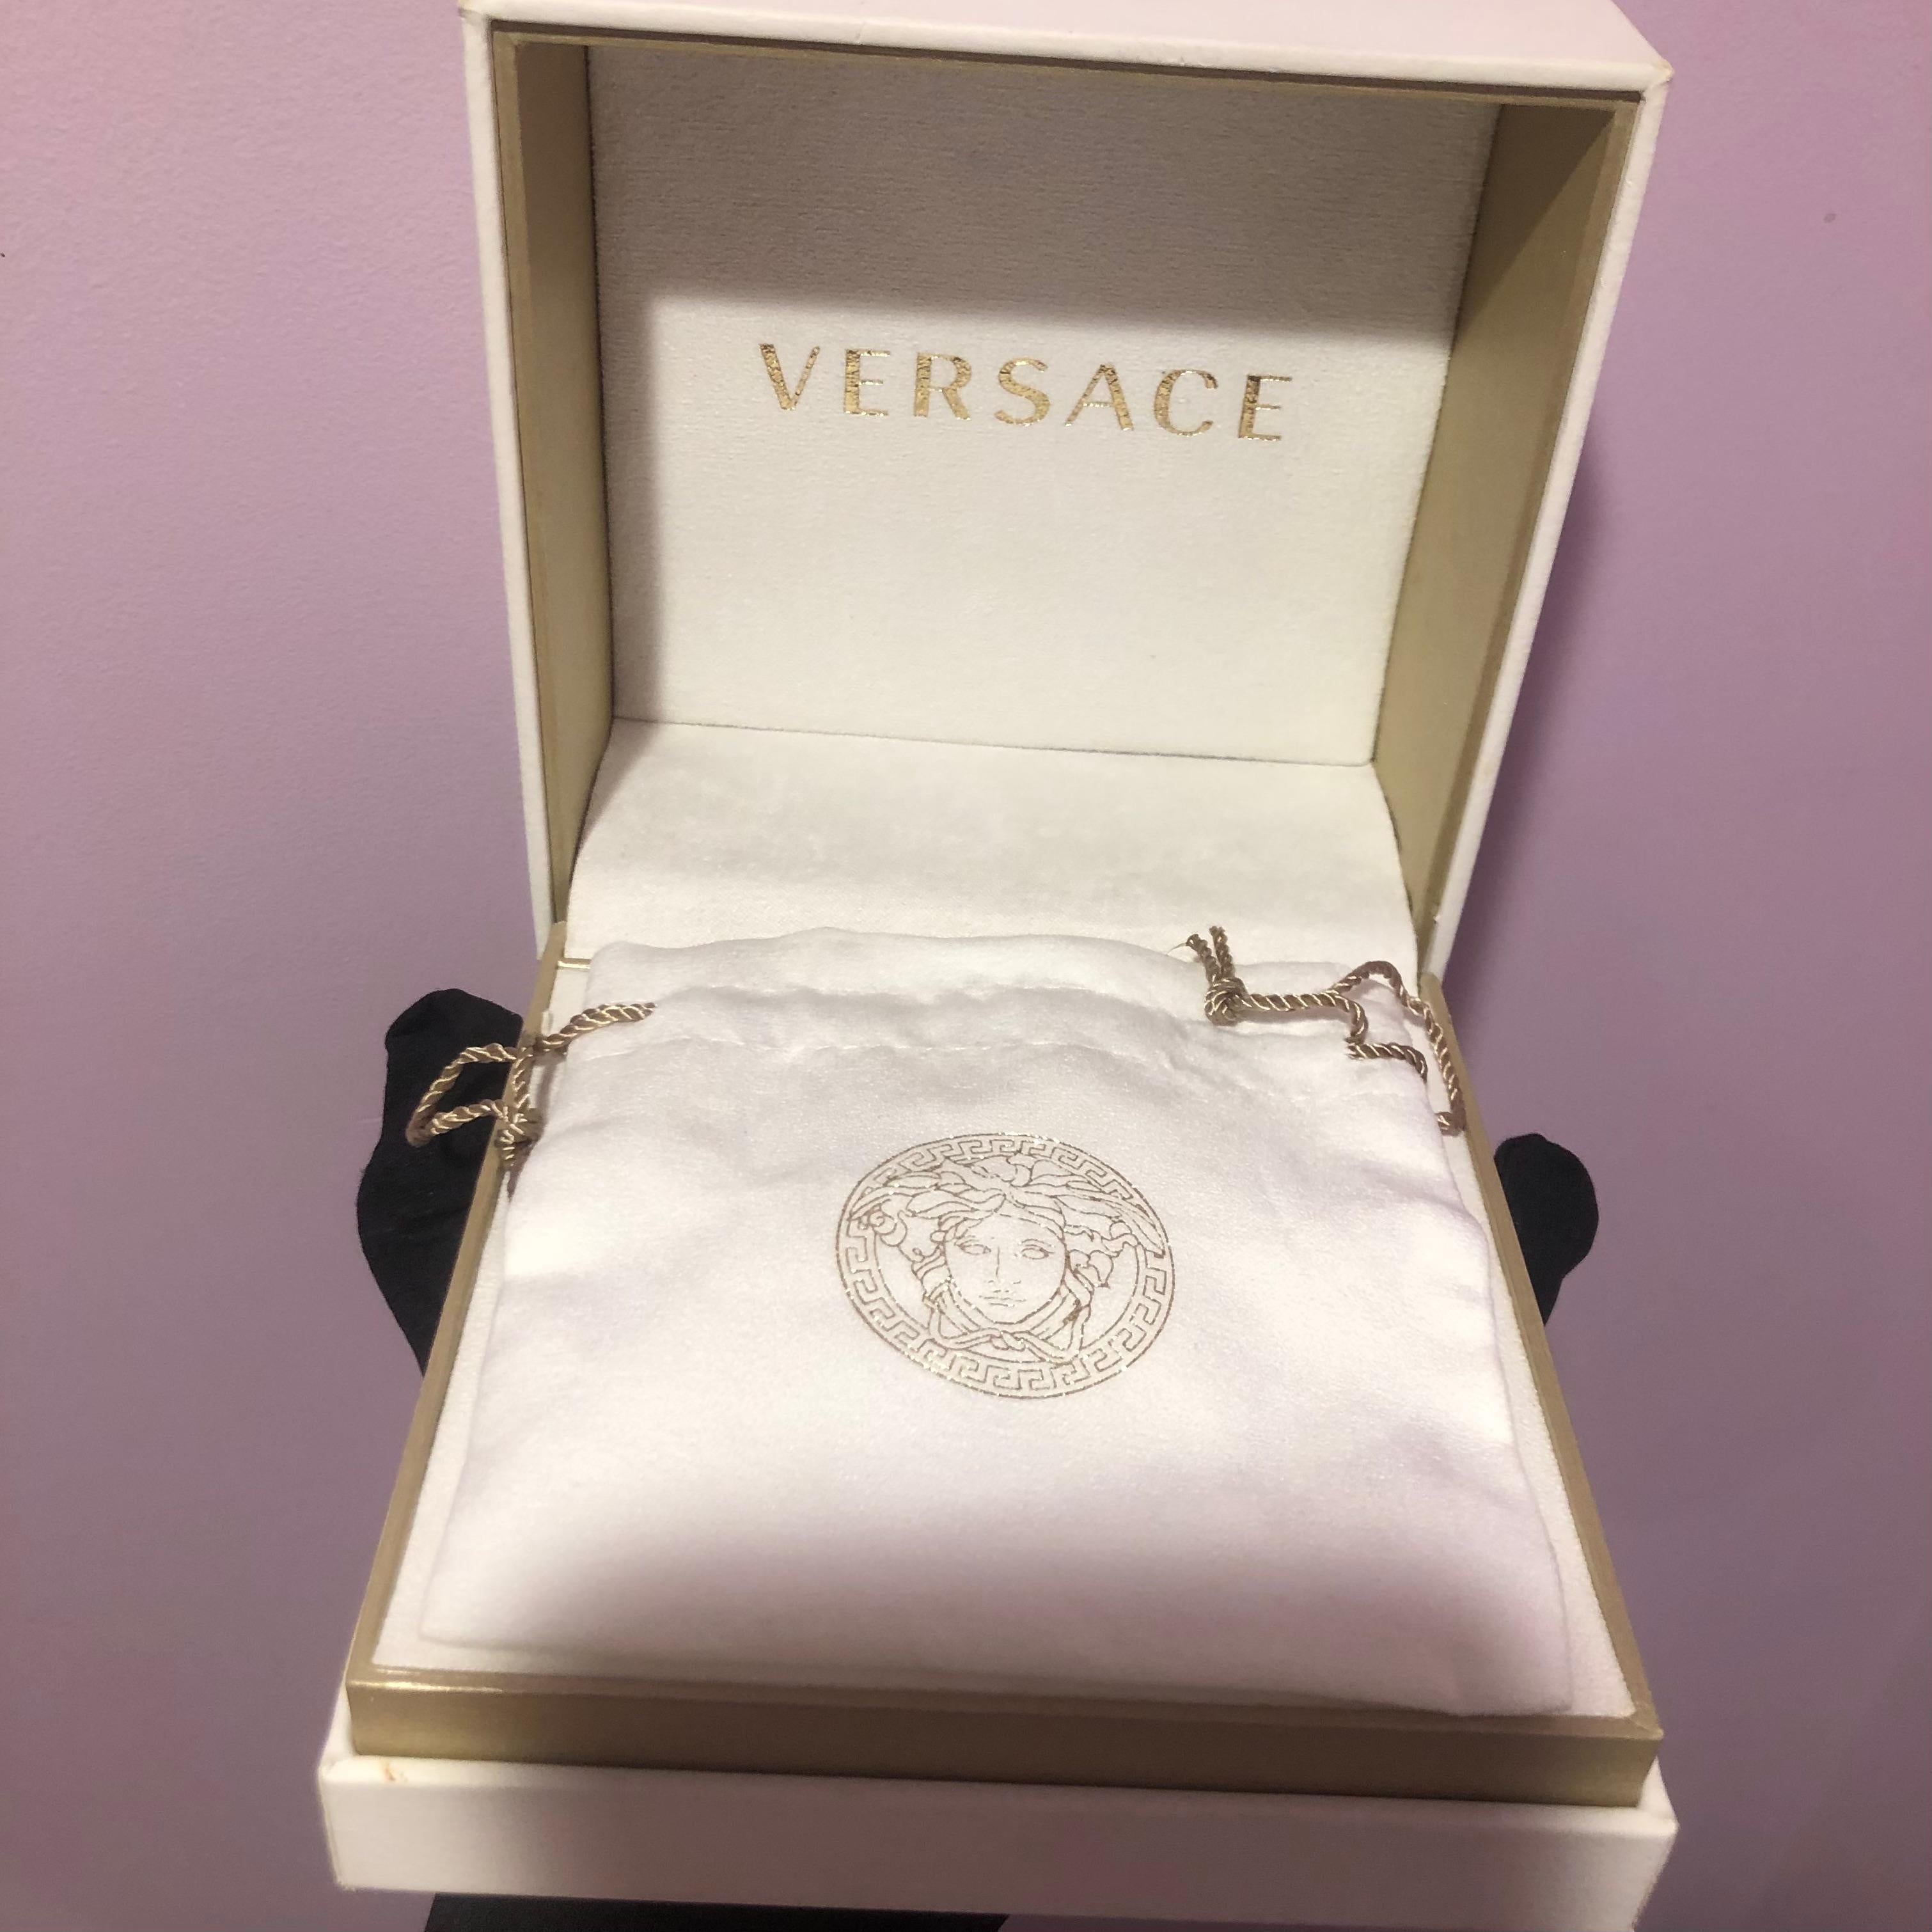 Versace Men’s 42mm Watch with Custom Diamond Iced Bezel For Sale 2